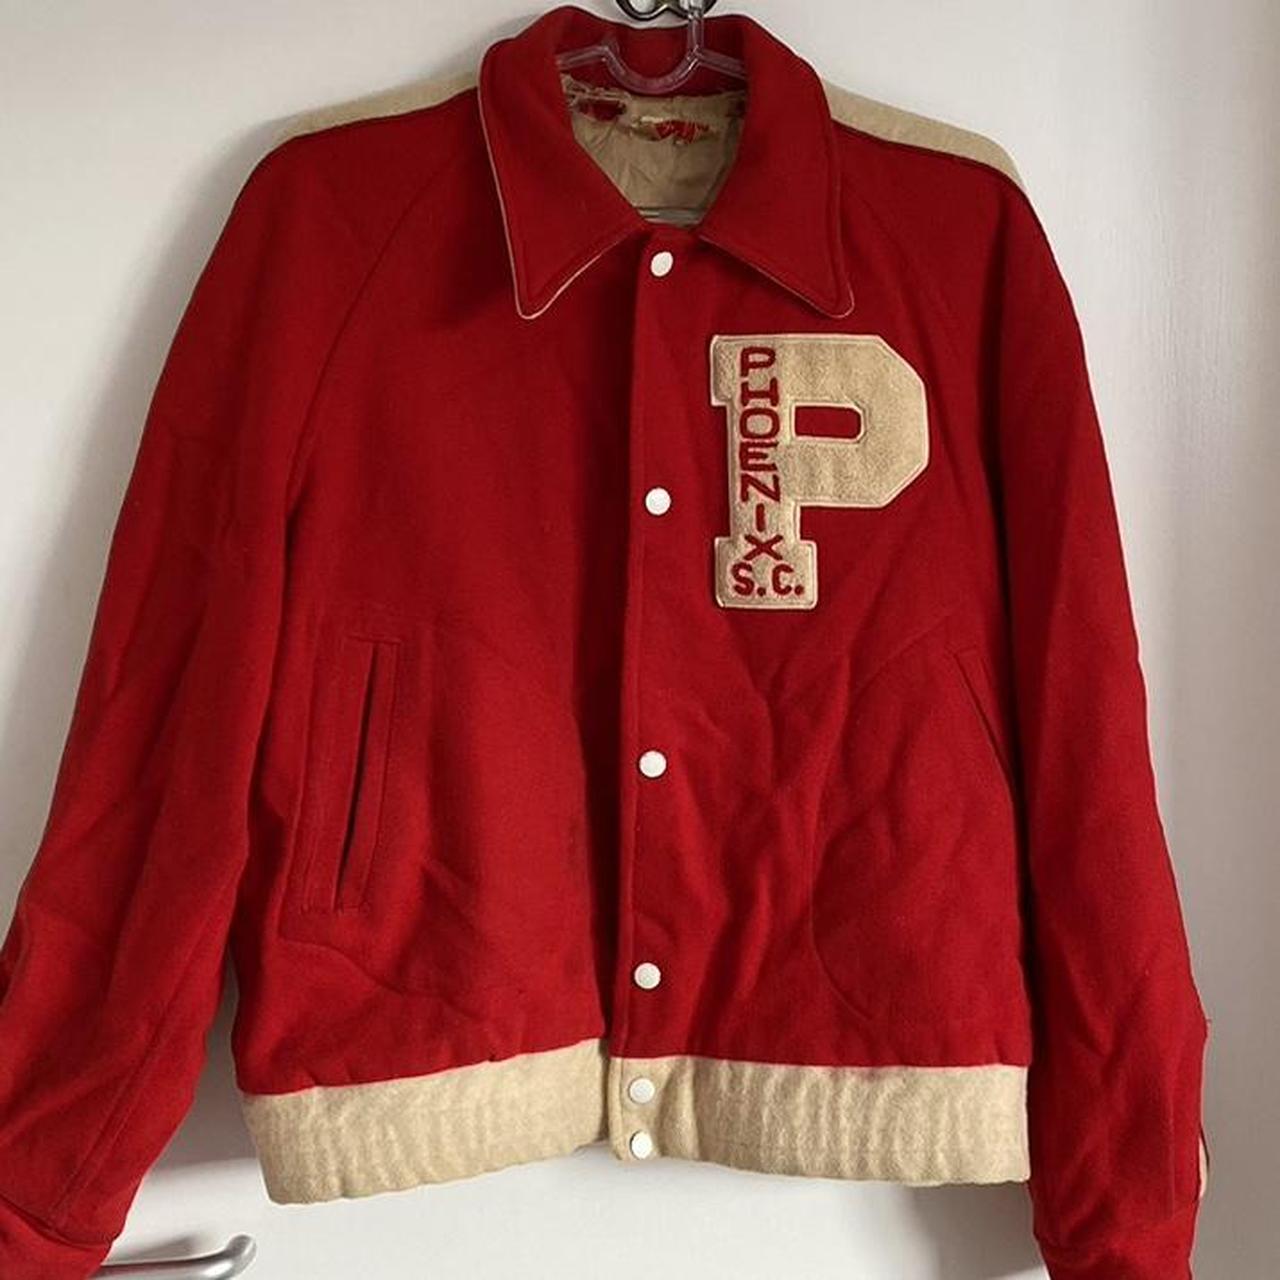 Vintage Varsity jacket ⭐️🌟⭐️ general ware visible in... - Depop